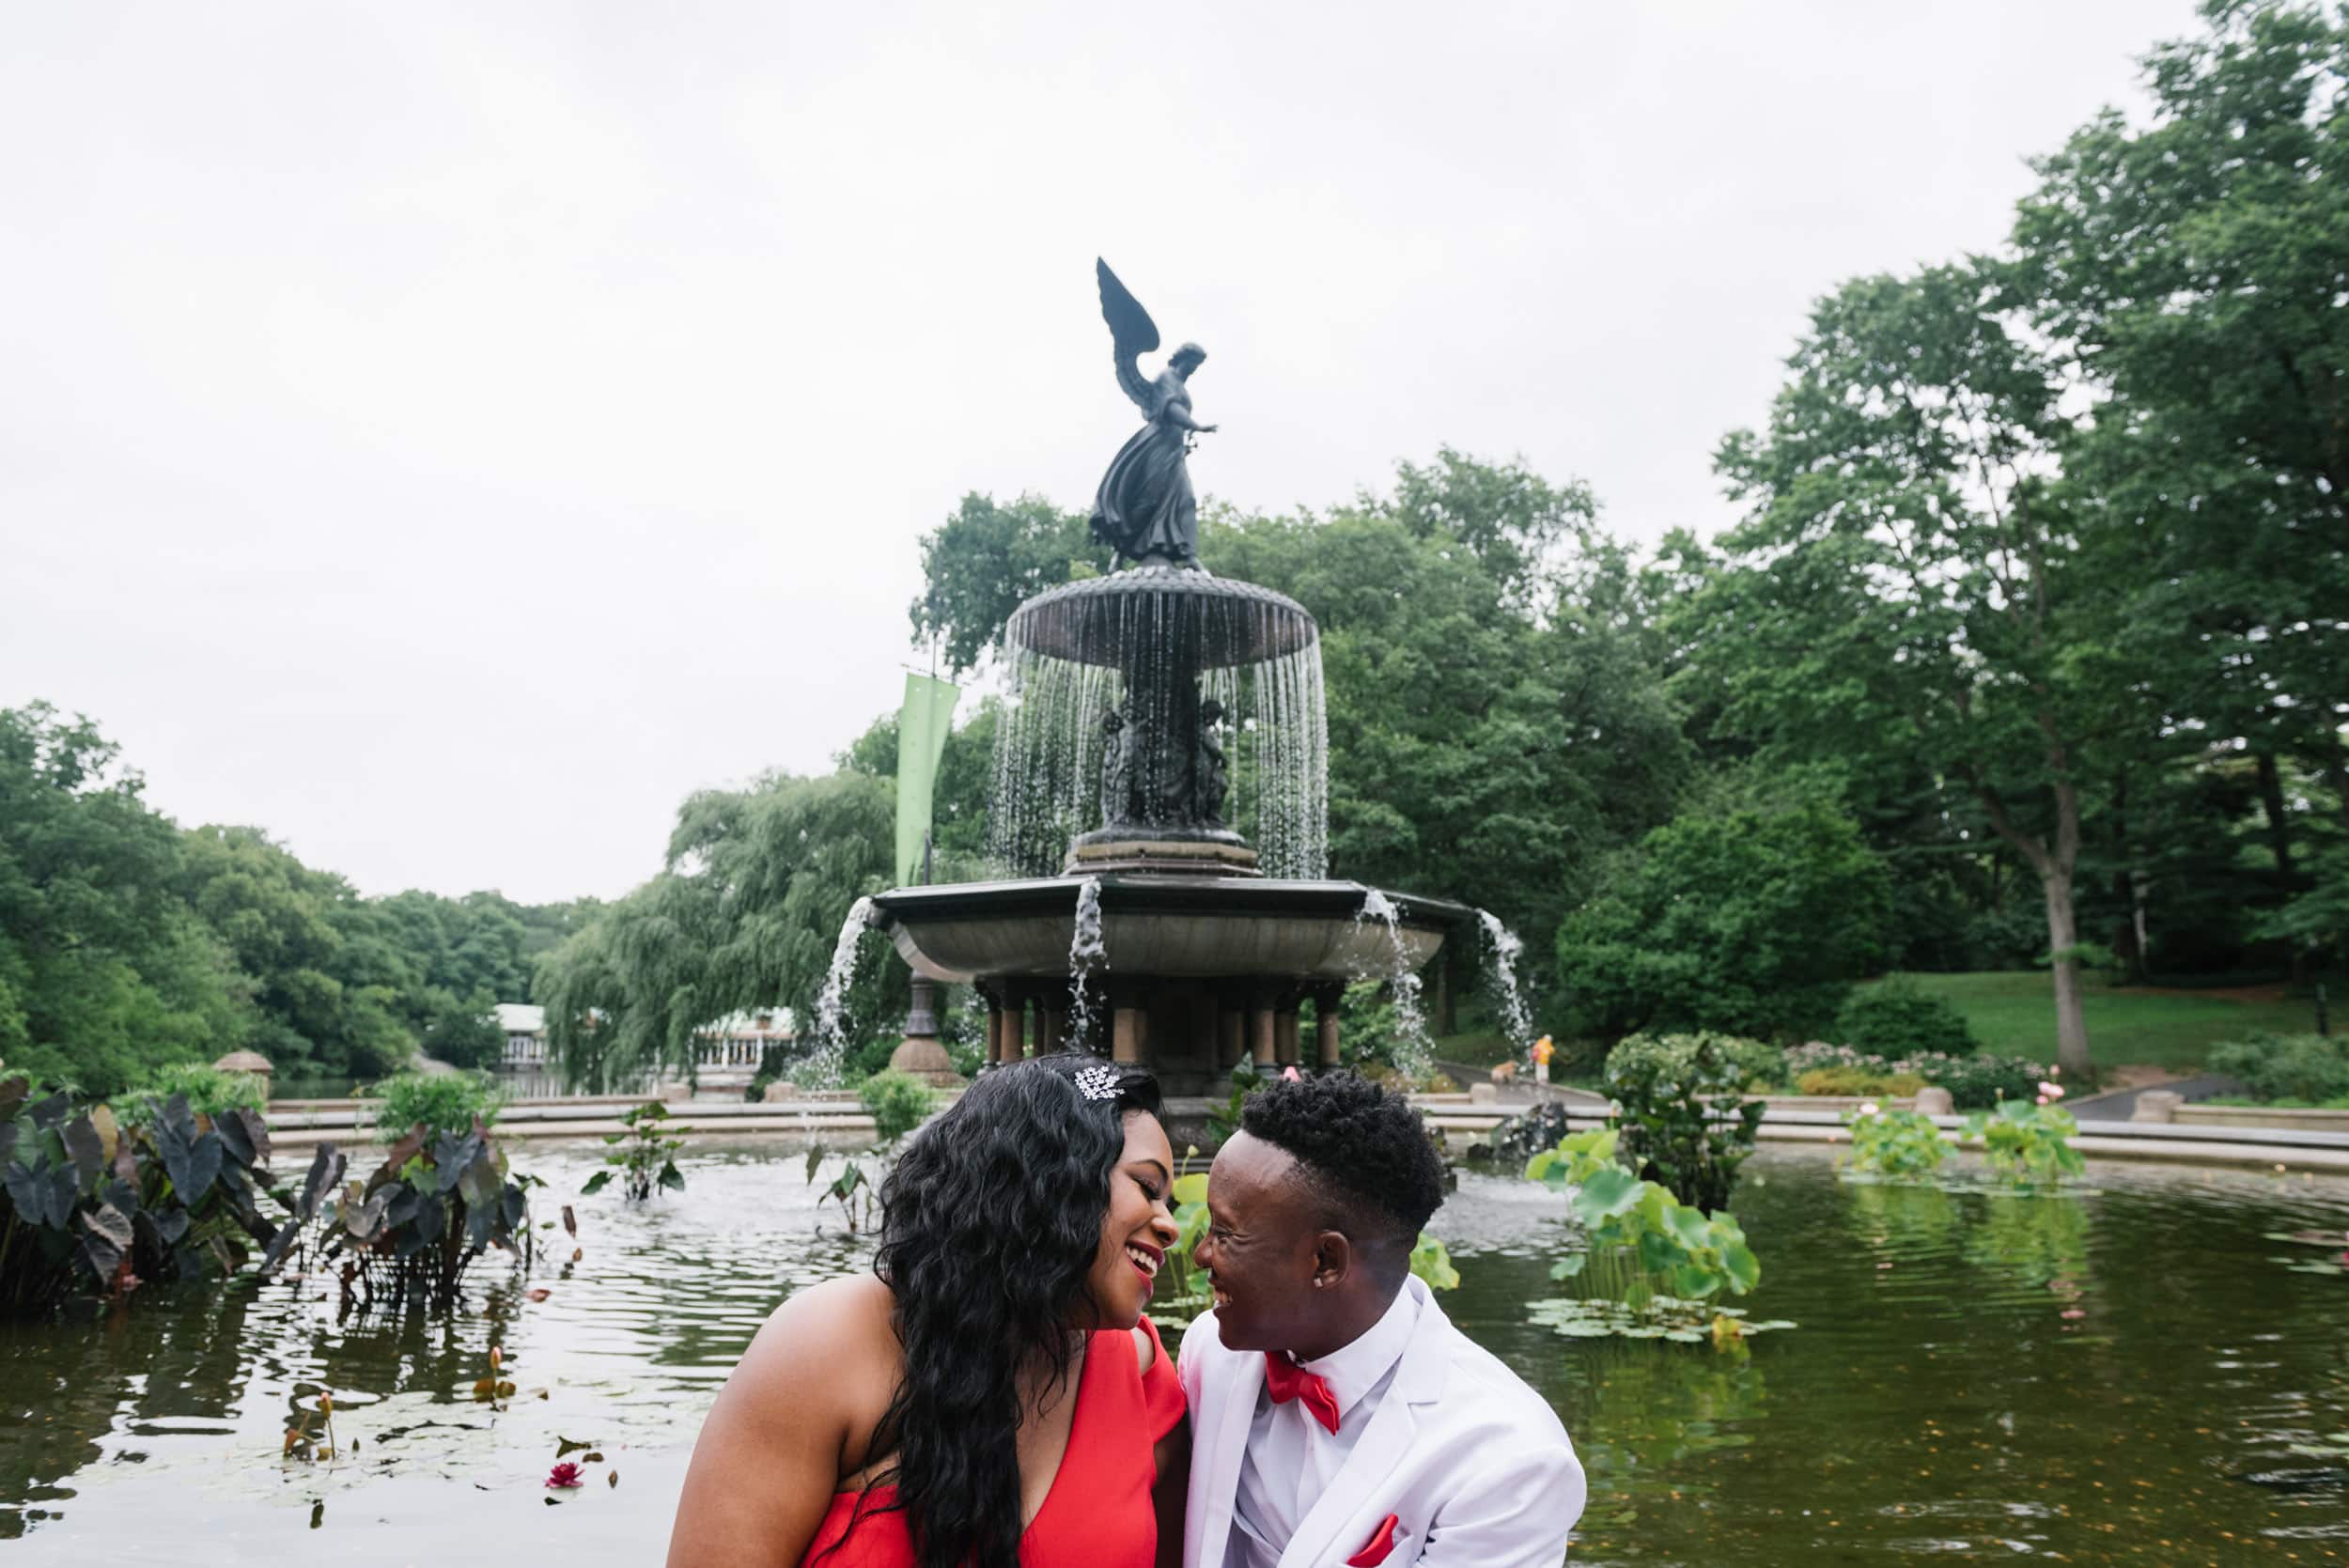 Bethesda Fountain wedding in Central Park NYC